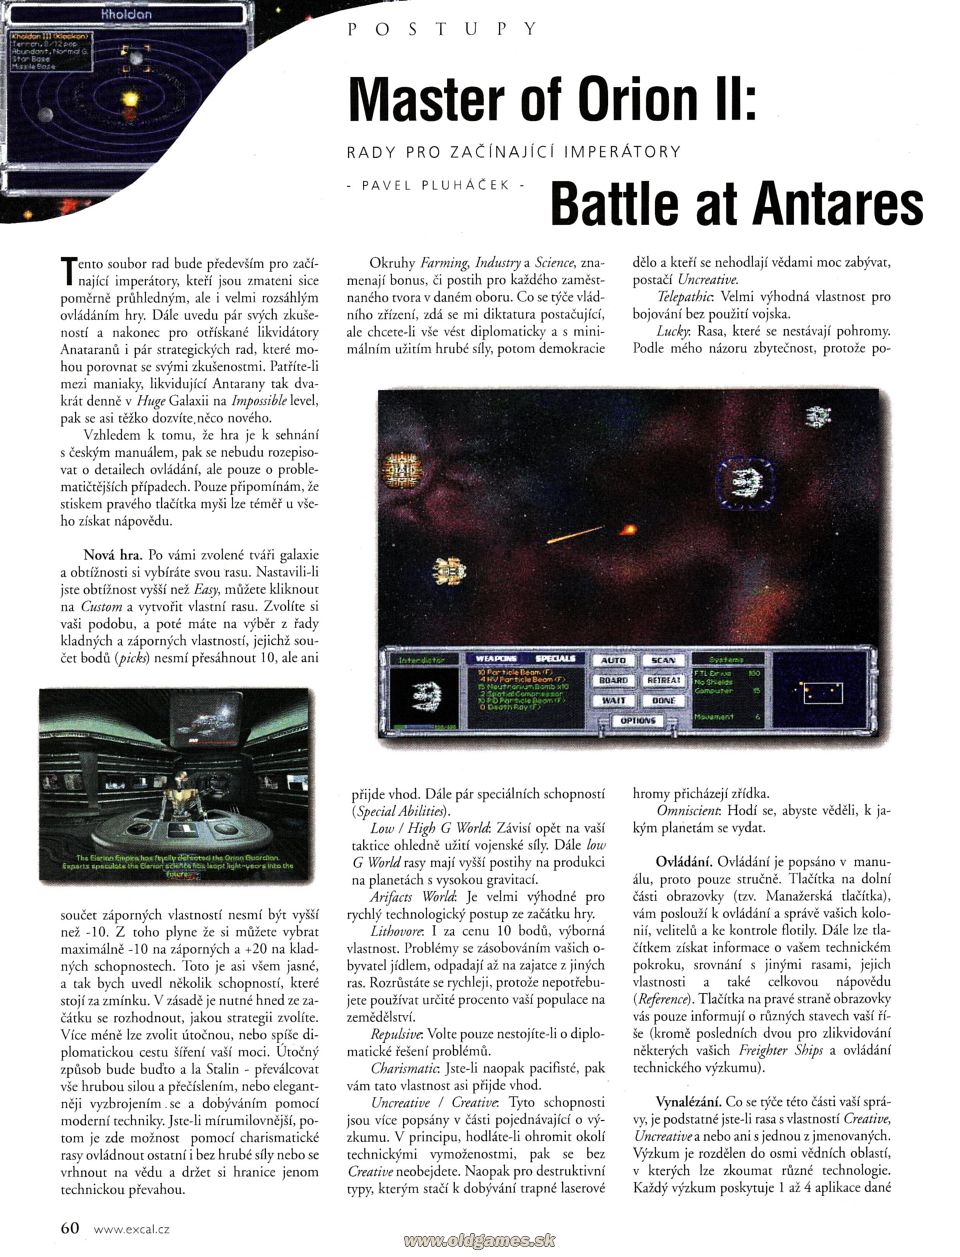 Master of Orion II: Battle at Antares - Návod